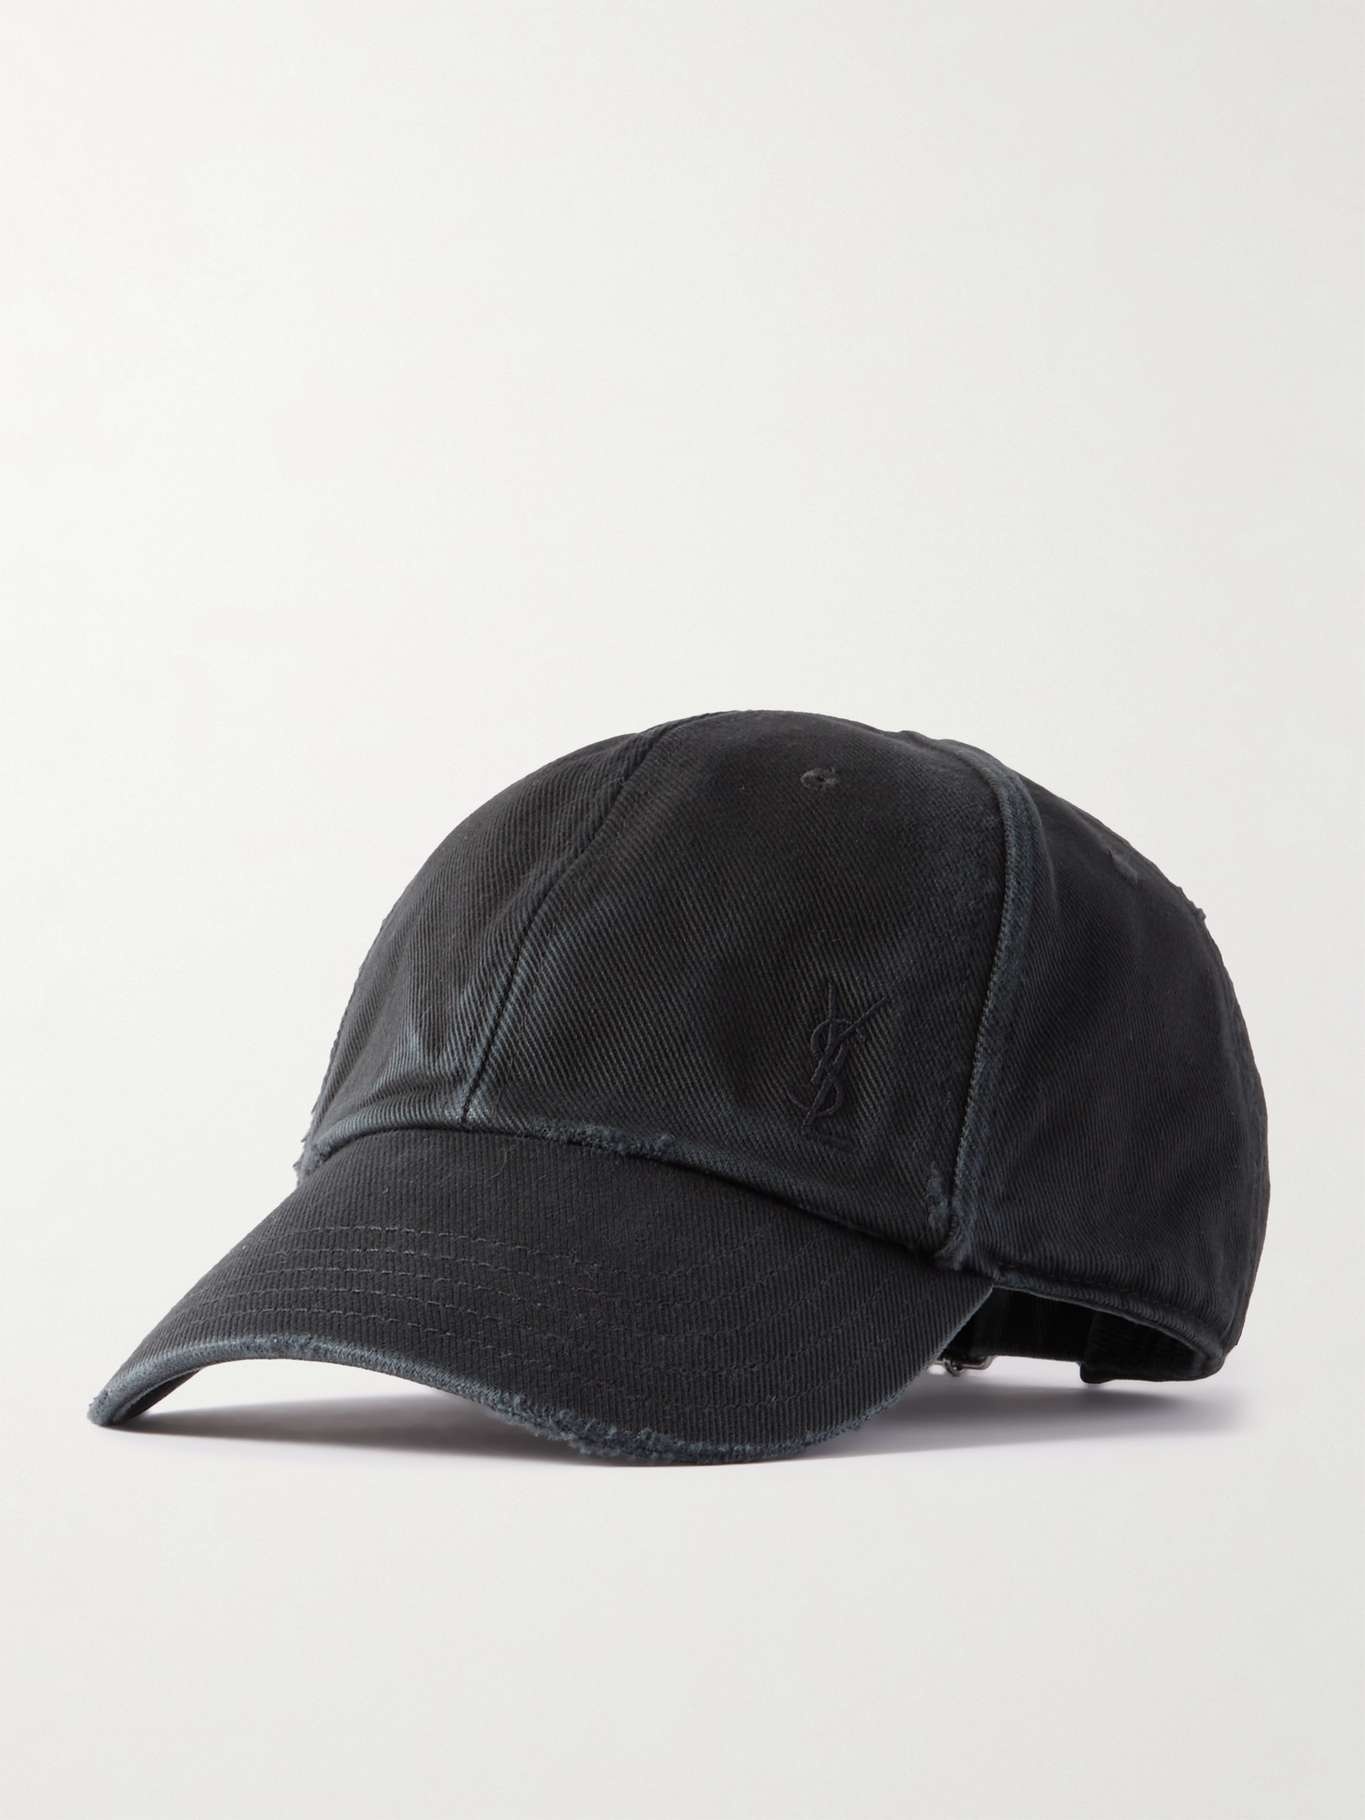 Distressed denim hat - 1